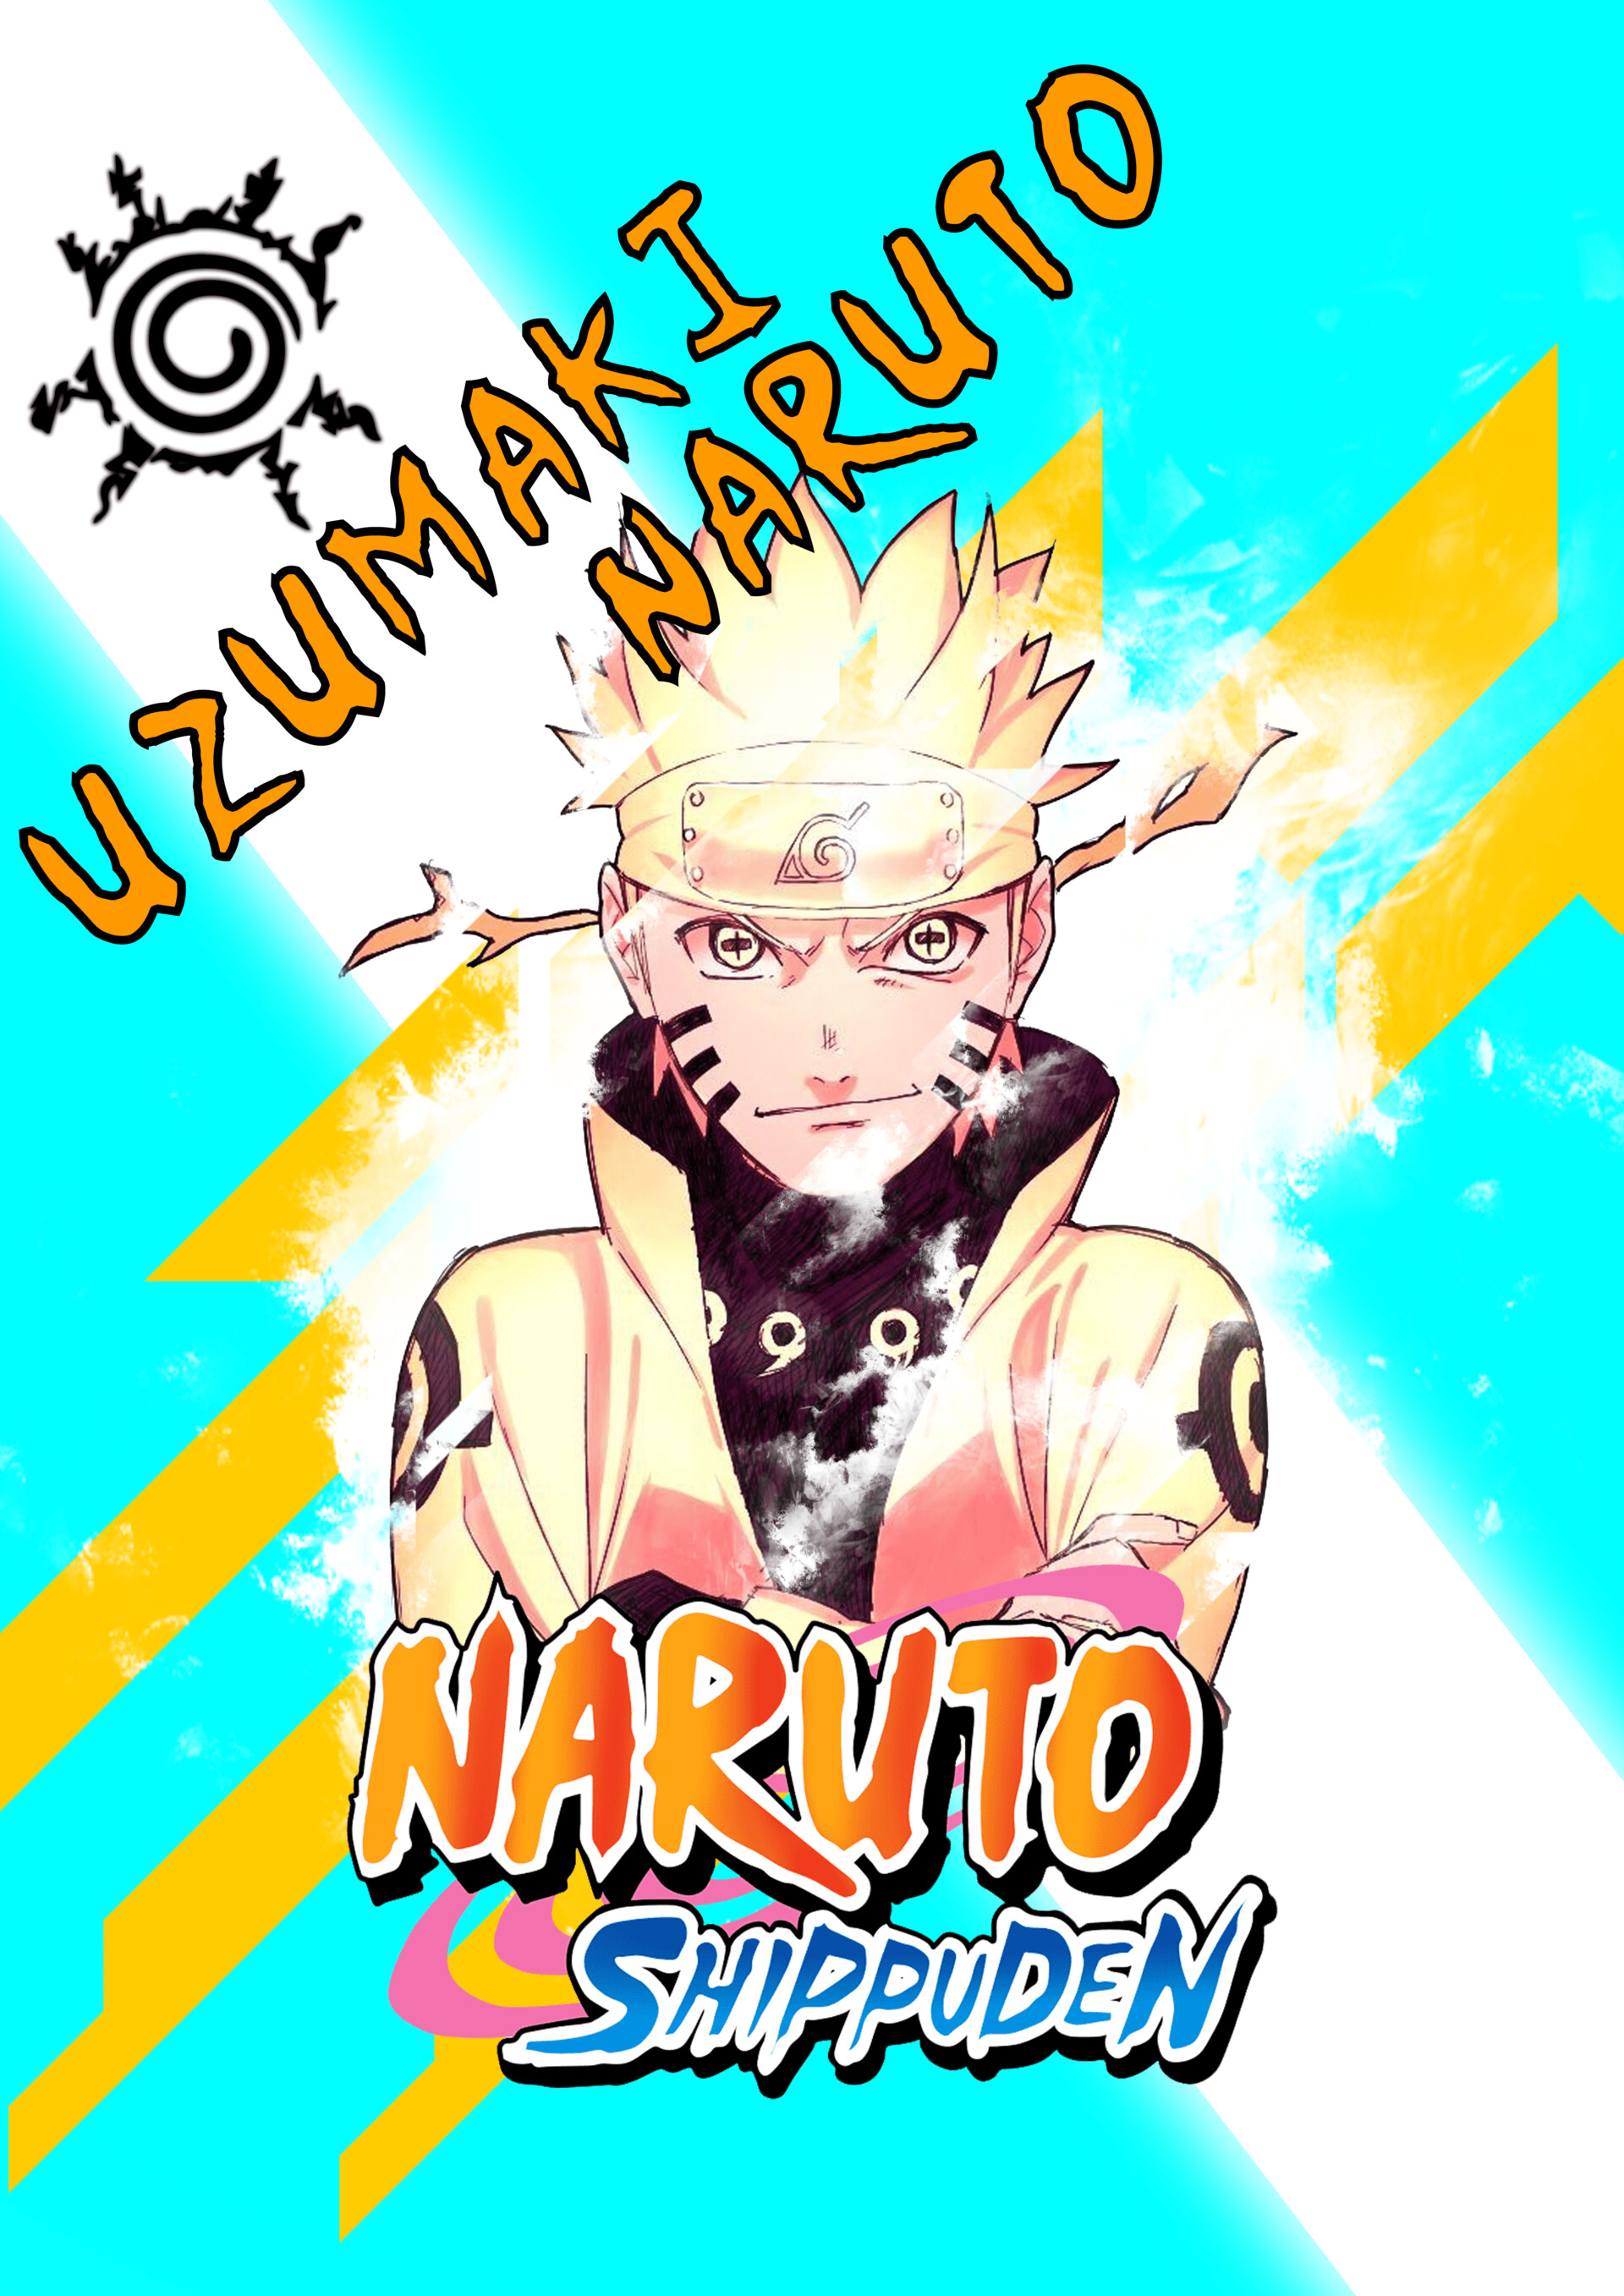 ArtStation - Naruto Shippuden anime poster